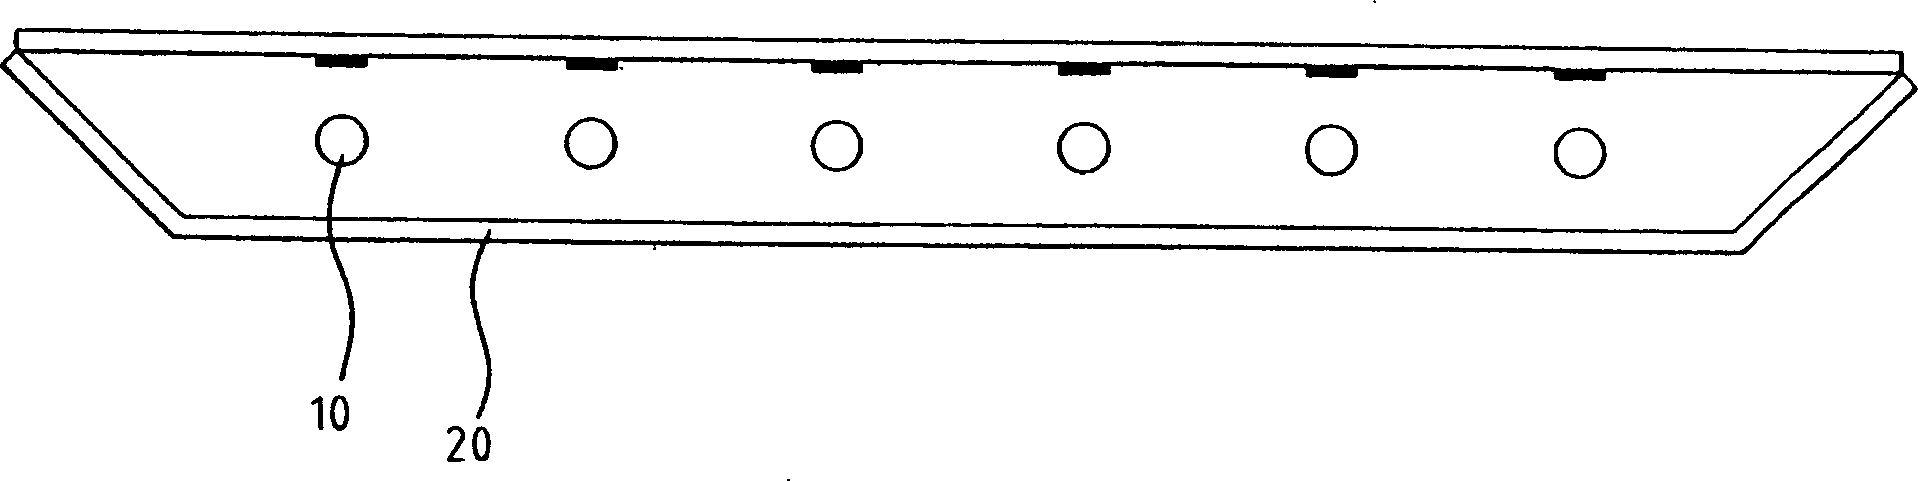 Downward type back light module